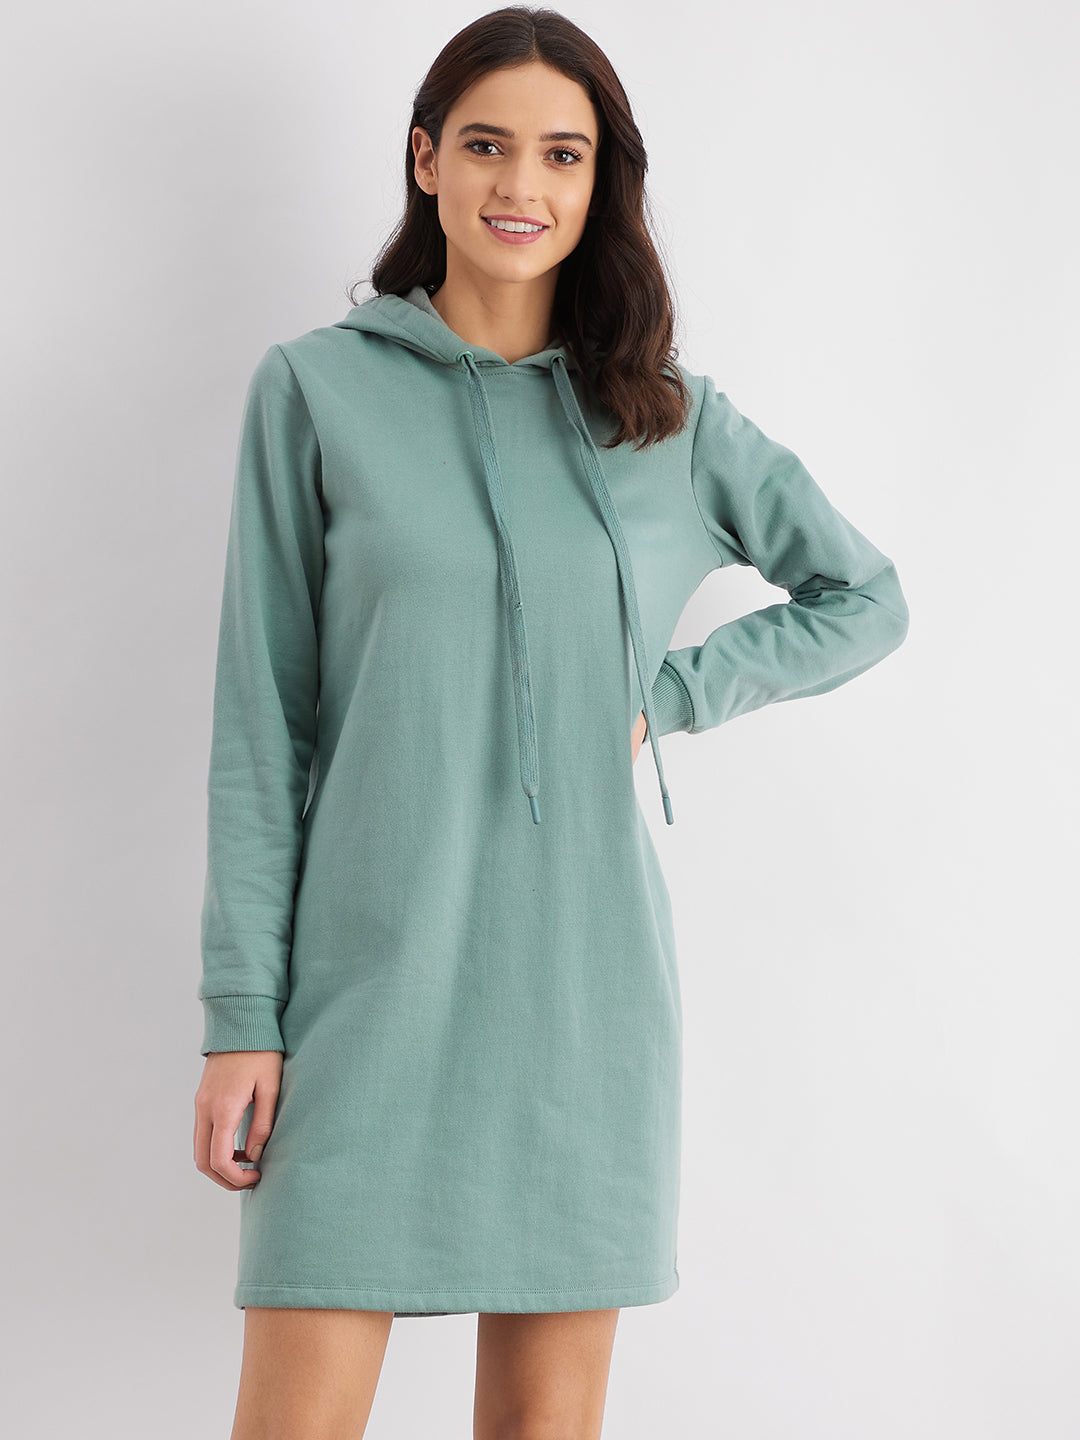 Green Fleece Hooded Sweatshirt Dress